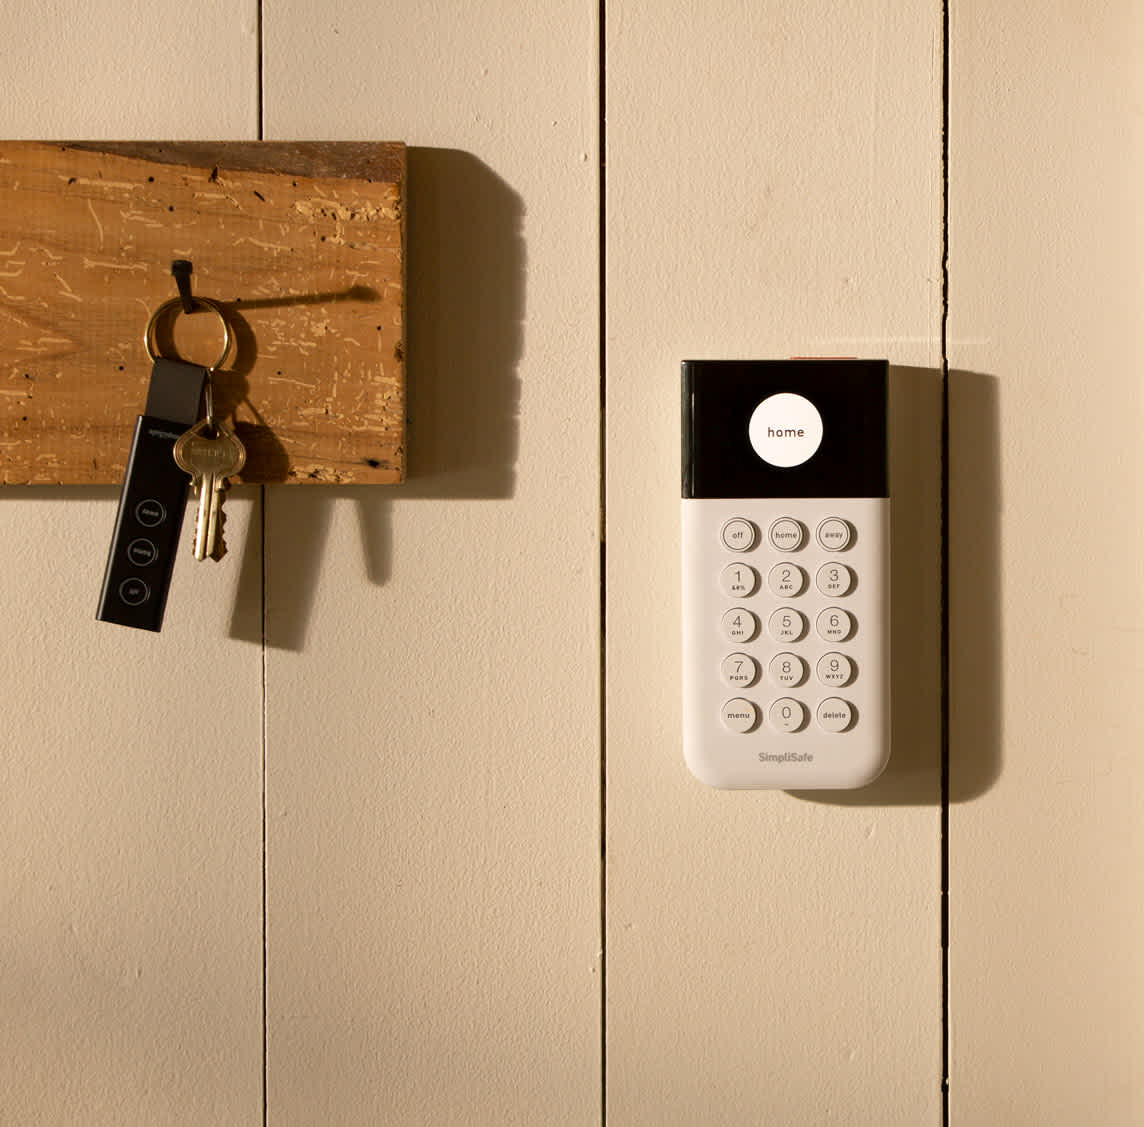 SimpliSafe Keypad on wall next to key hook